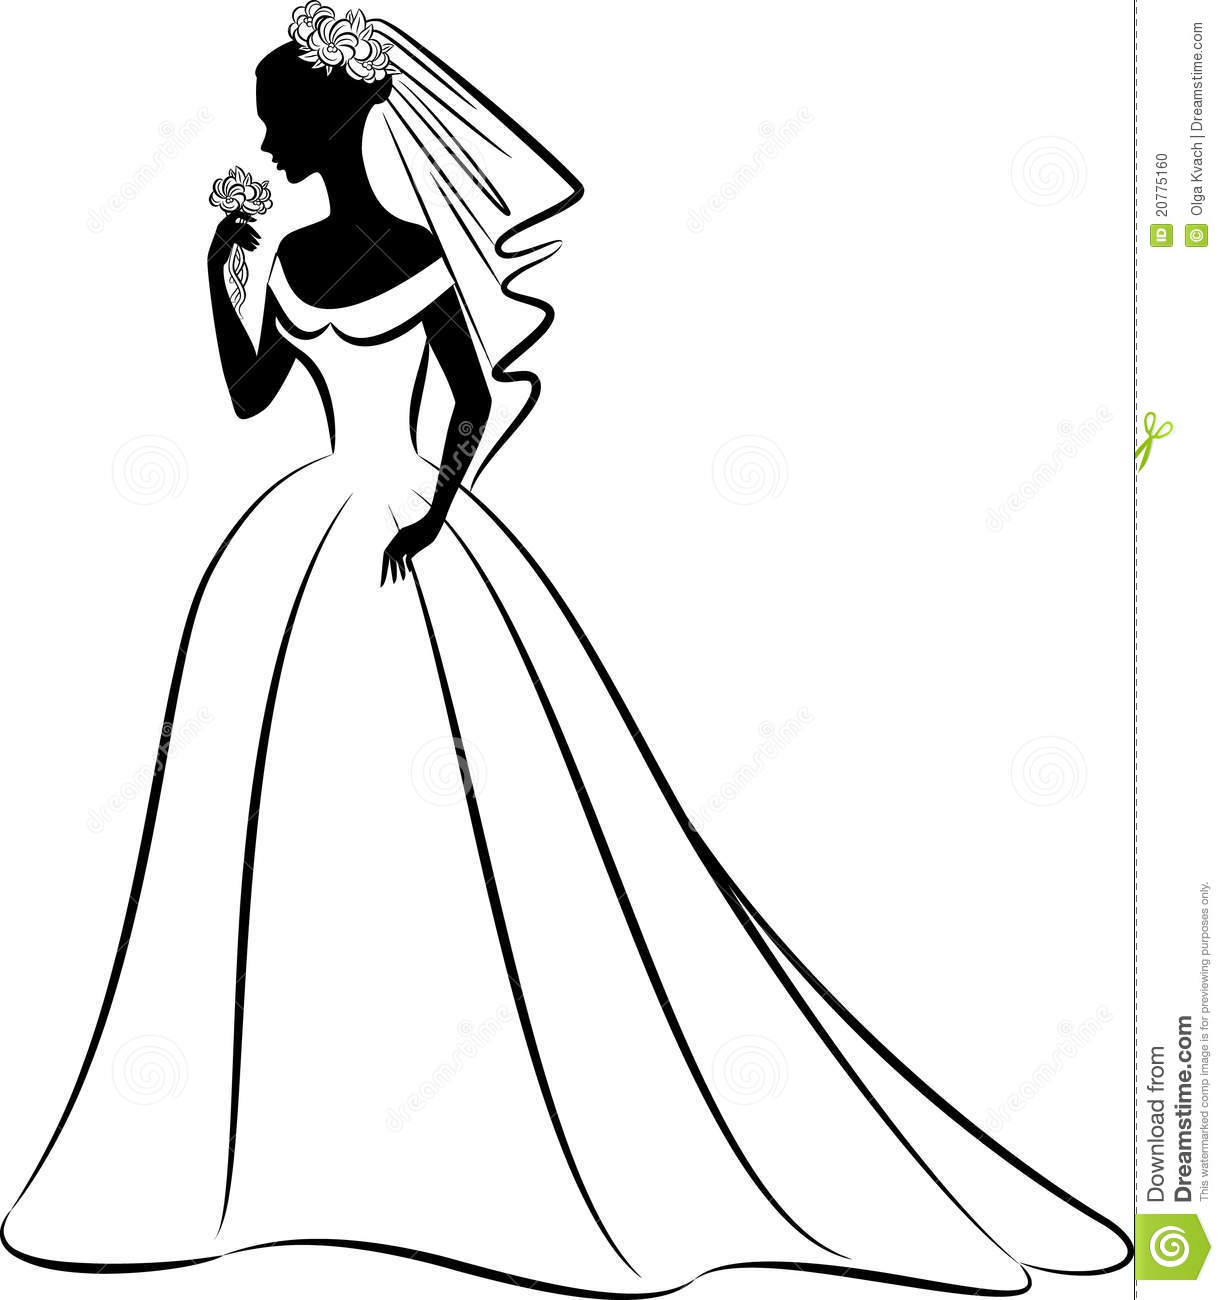 Stock Illustration of bride i